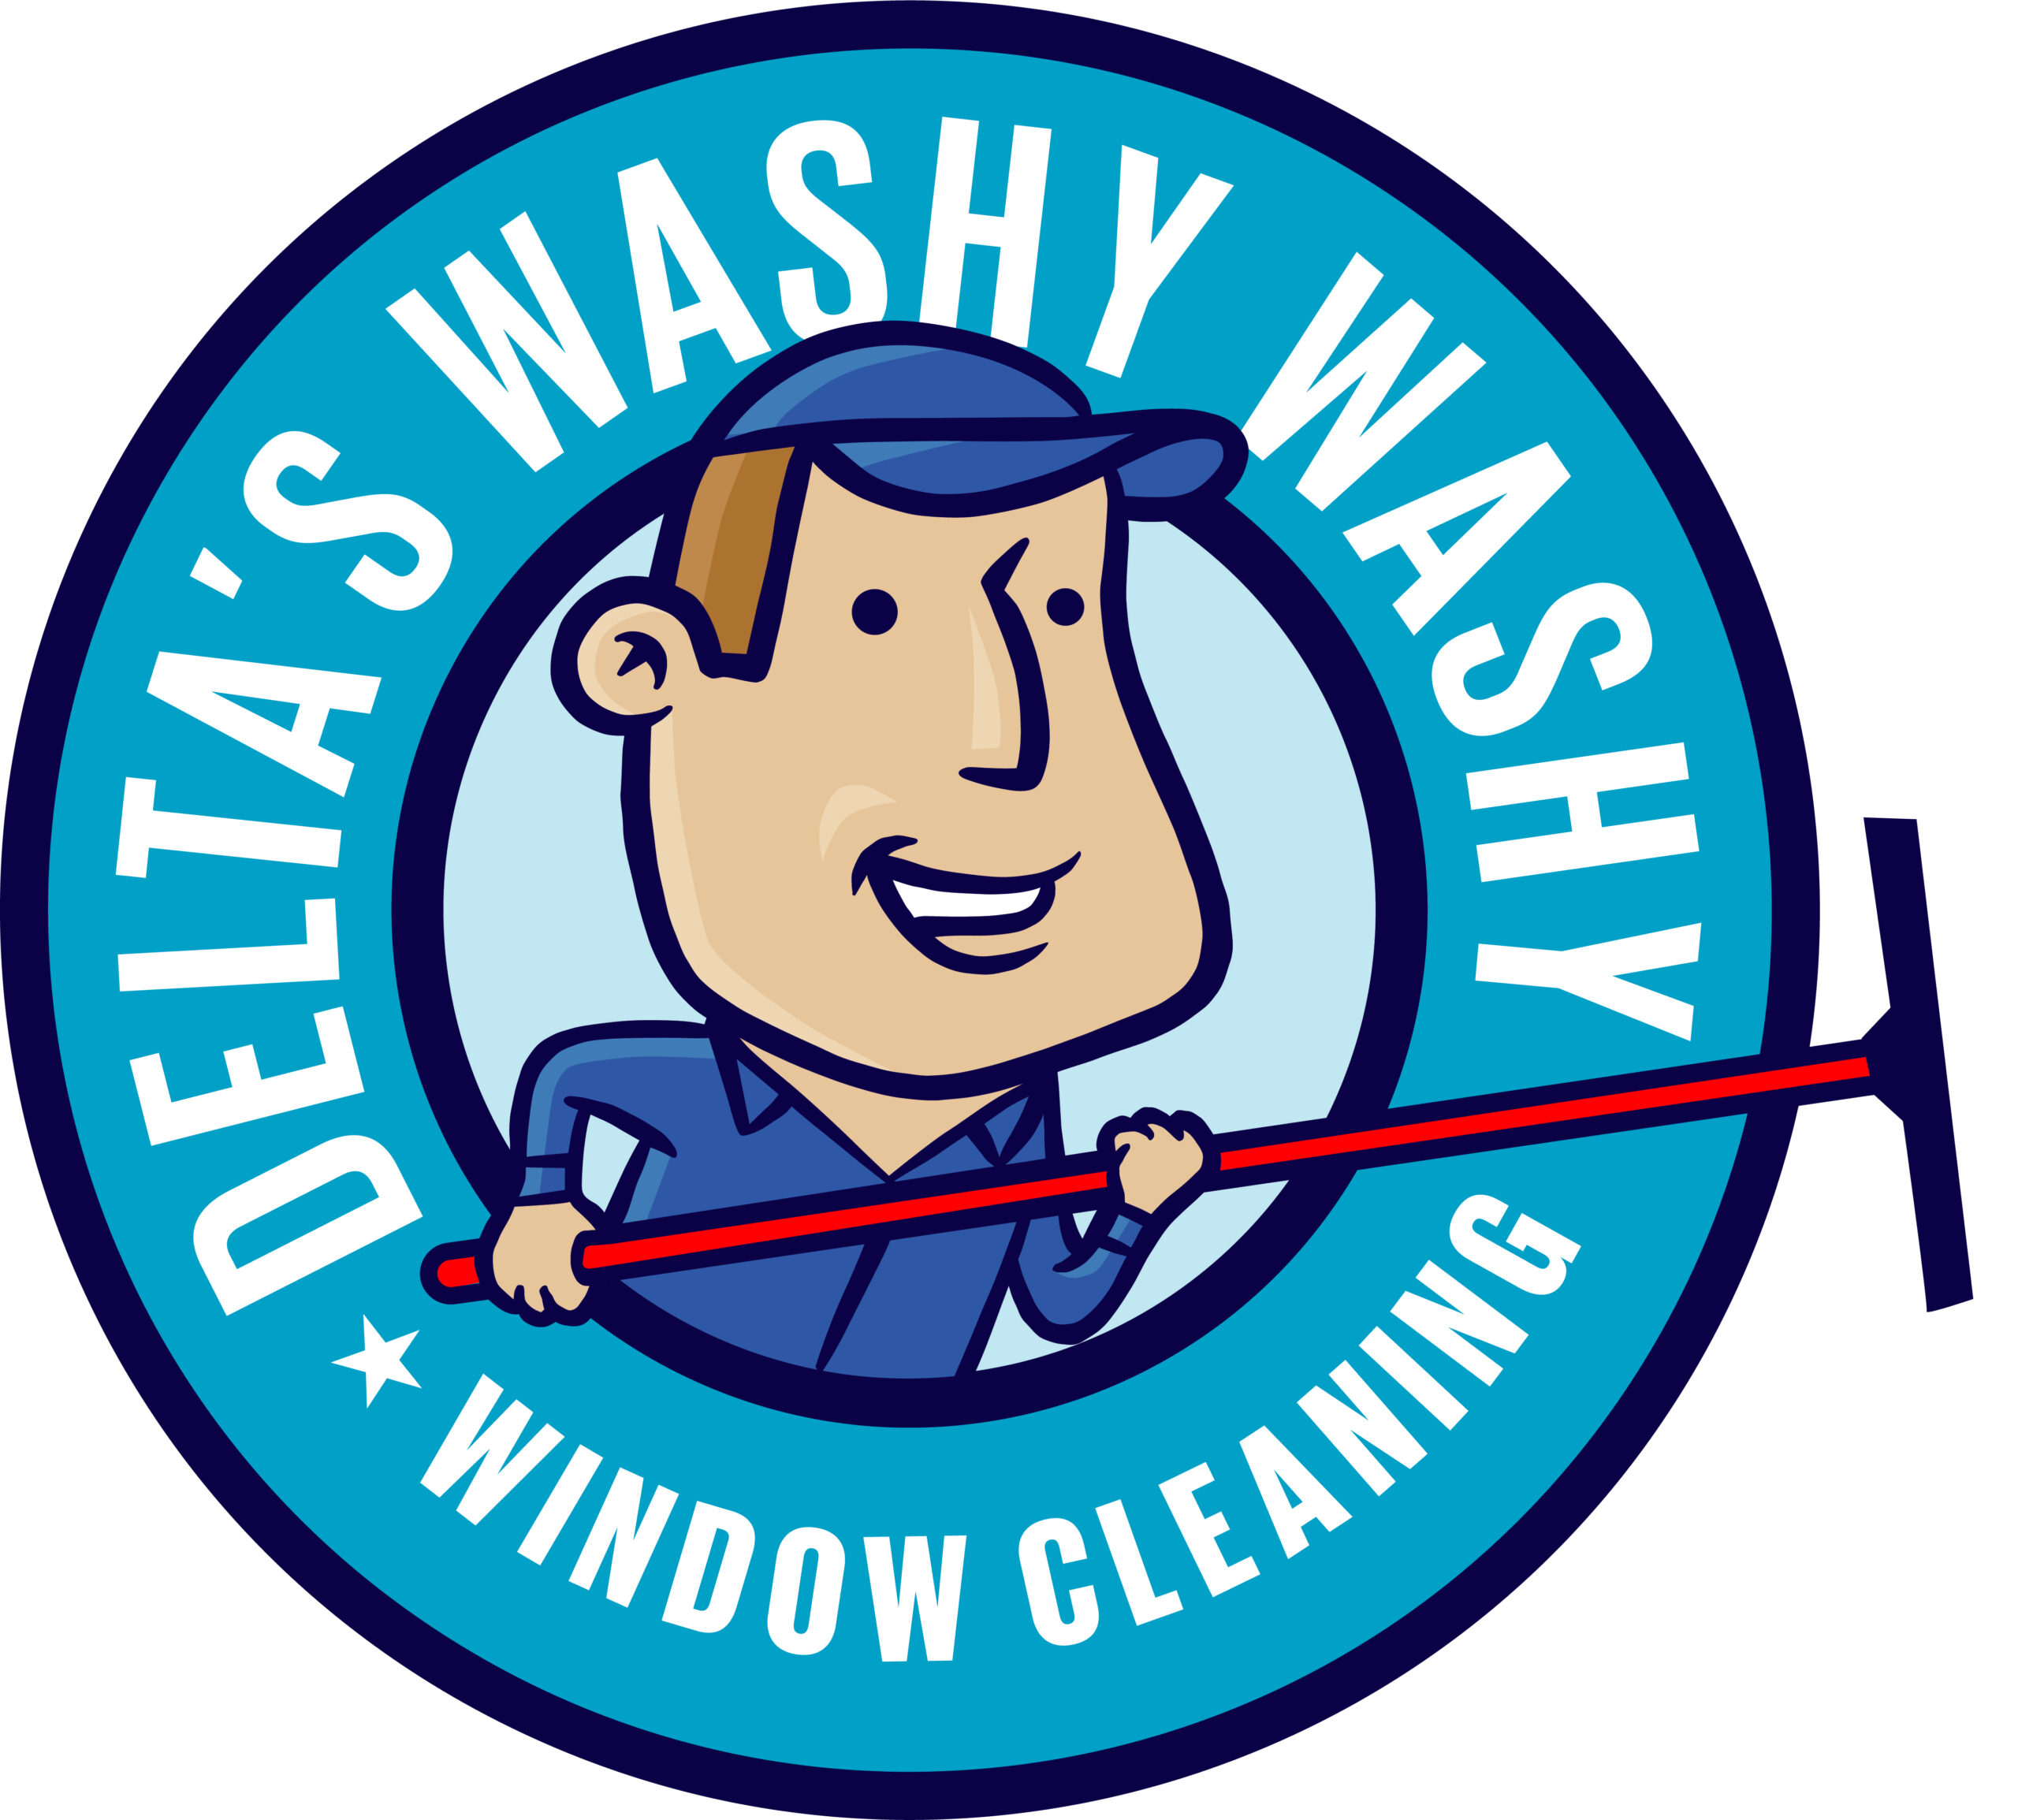 Washy Washy Window Cleaning Company